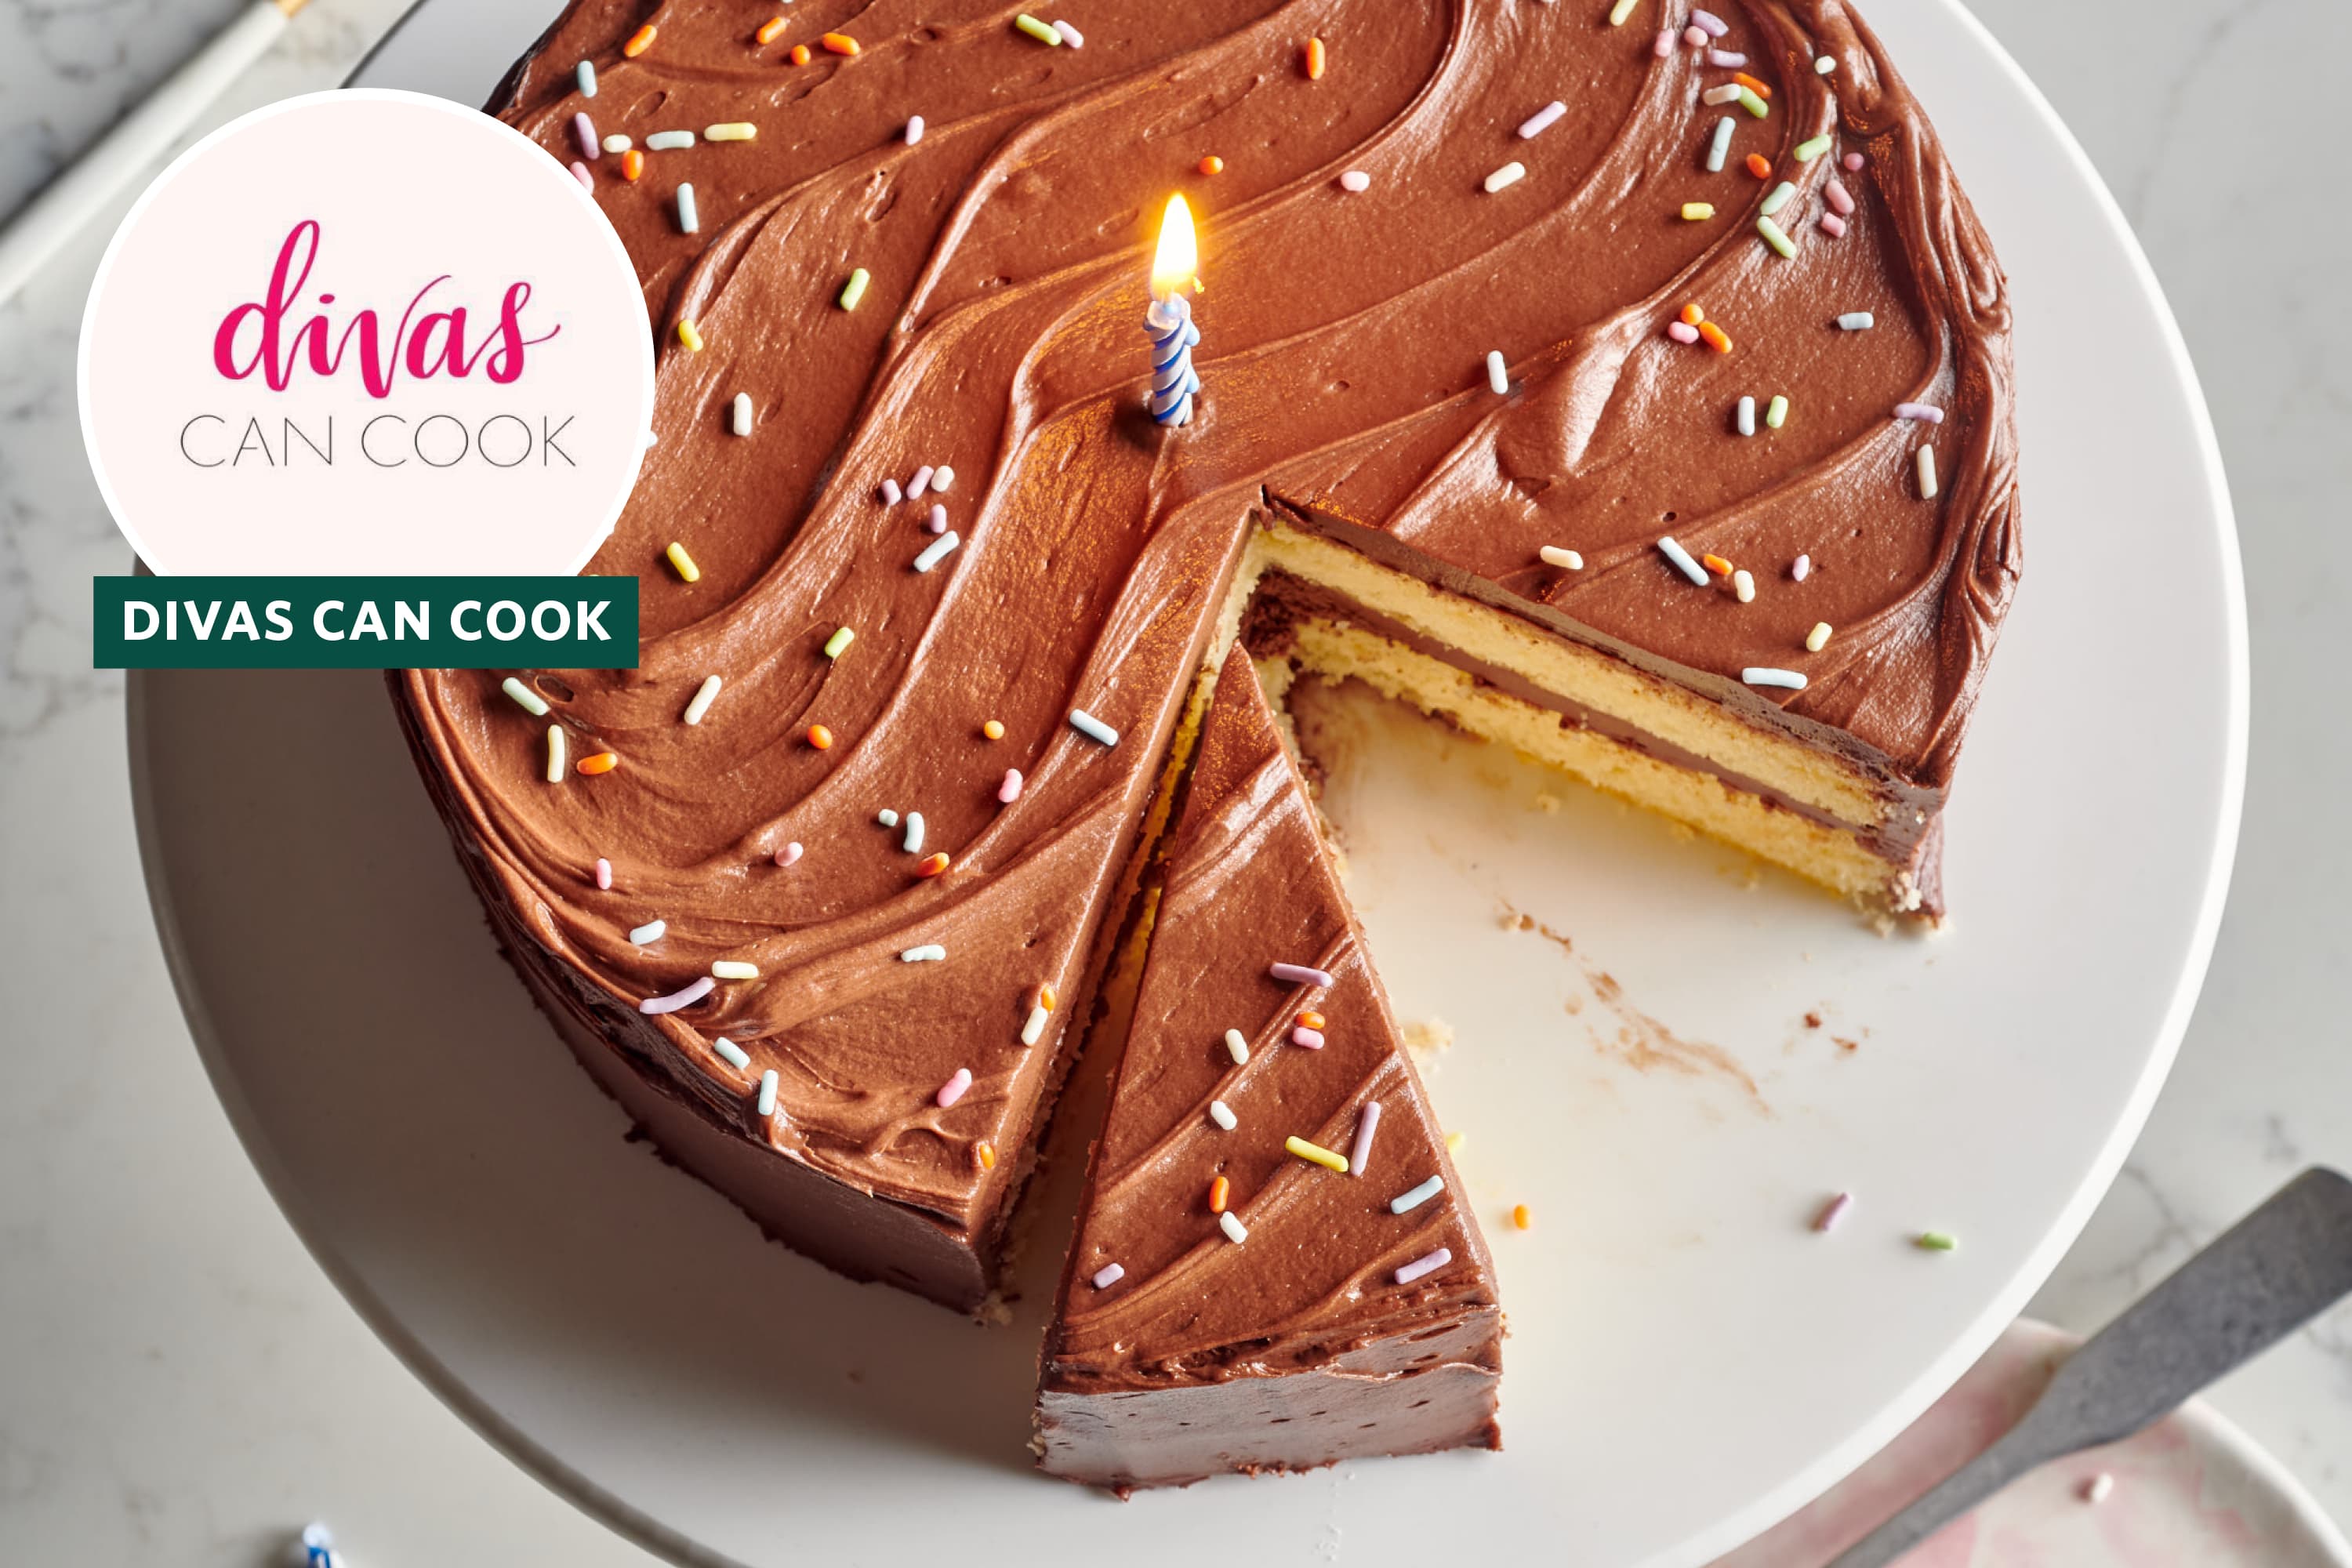 https://cdn.apartmenttherapy.info/image/upload/v1610048993/k/Photo/Series/2020-12-recipe-showdown-birthday-cake/Recipe-Showdown_Birthday-Cake_Graphics/birthday-cake-showdown-divas.jpg